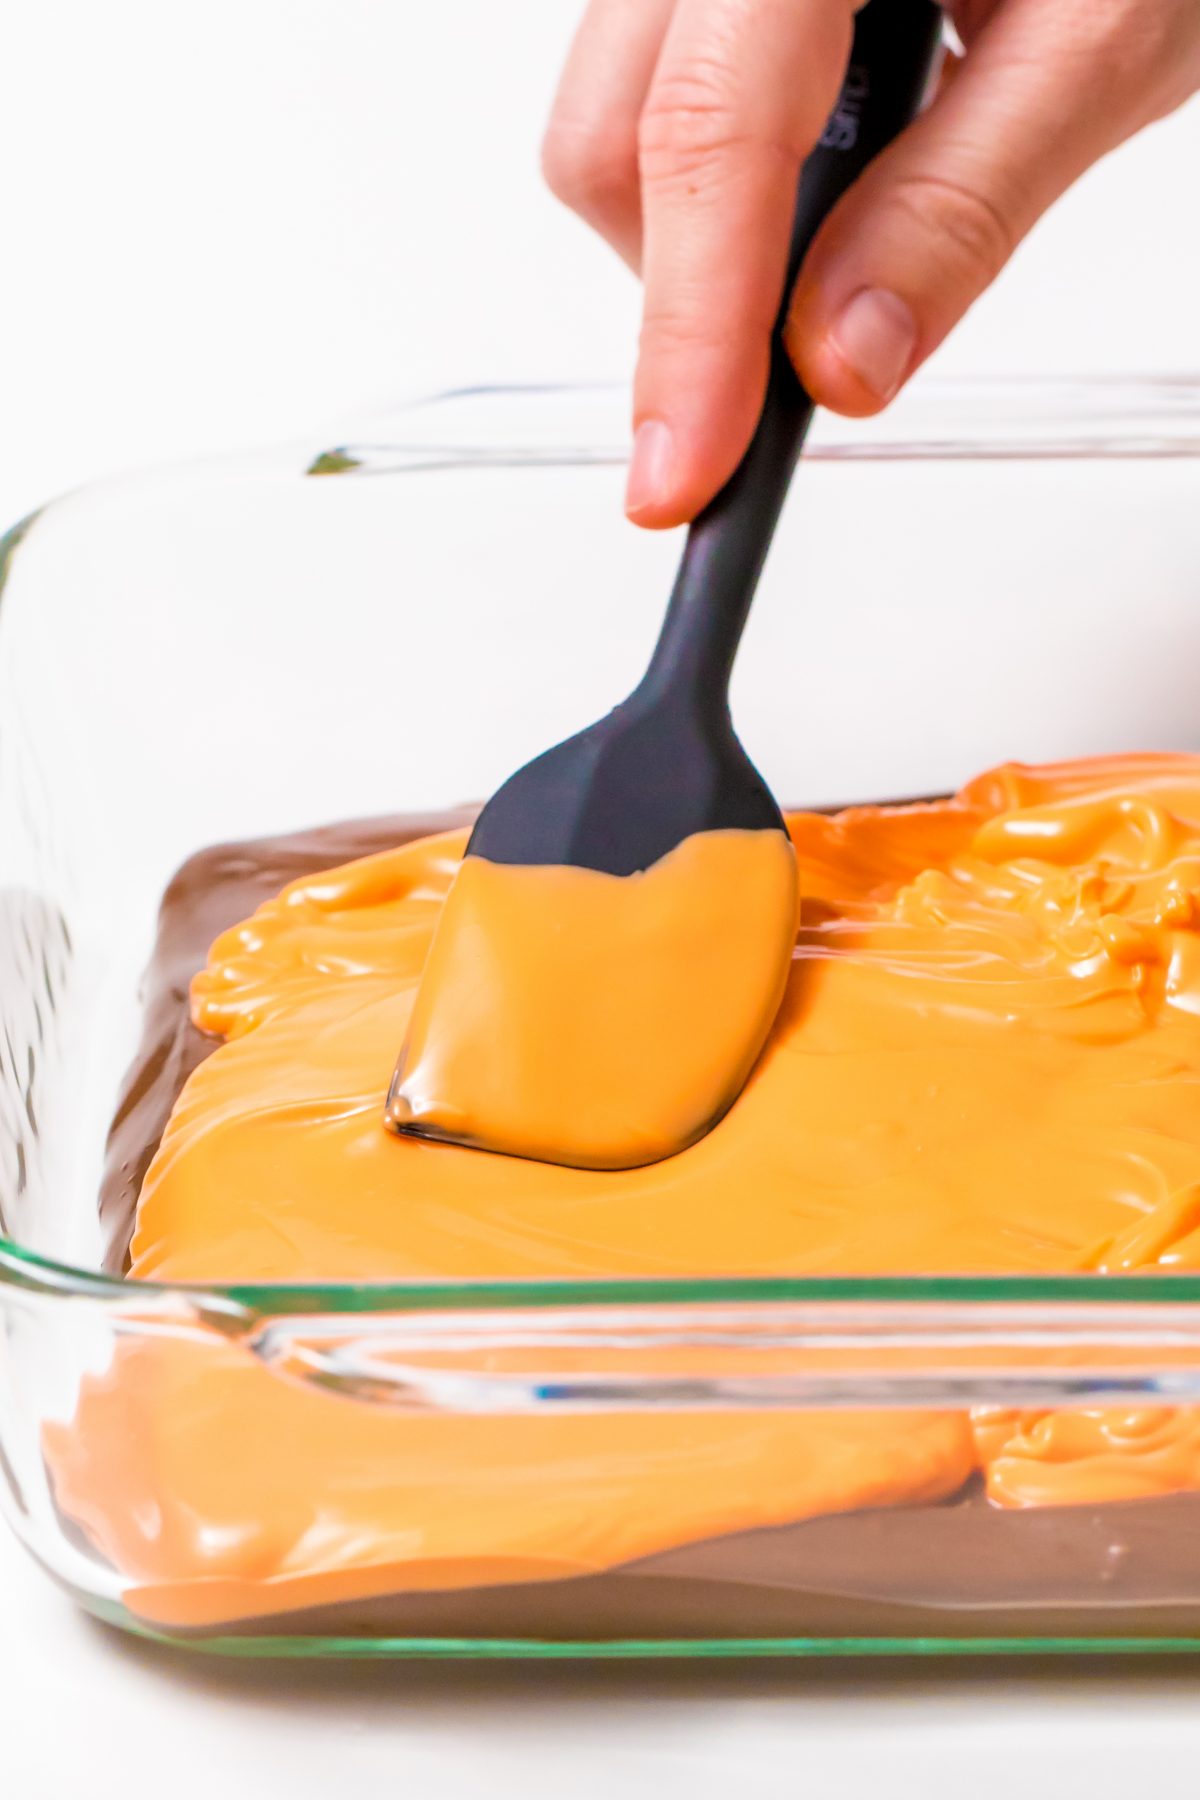 Make the orange candy melt layer